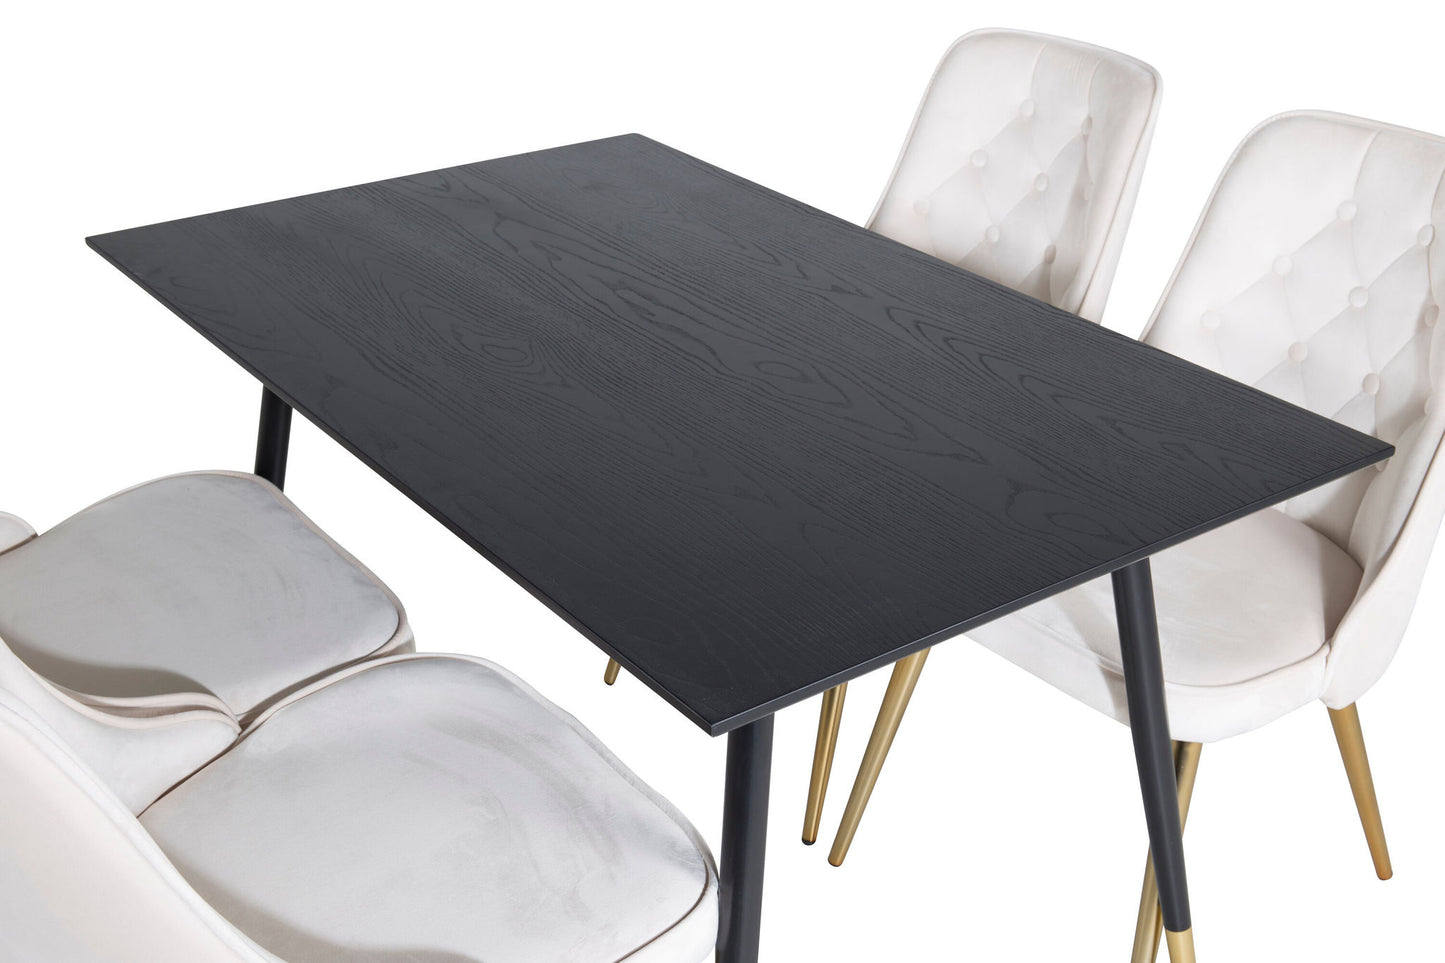 Dipp - Spisebord, 120 cm - Sort finér - Sorte ben m. Messing dipp+ velour Deluxe Spisebordsstol - Beige / Messing